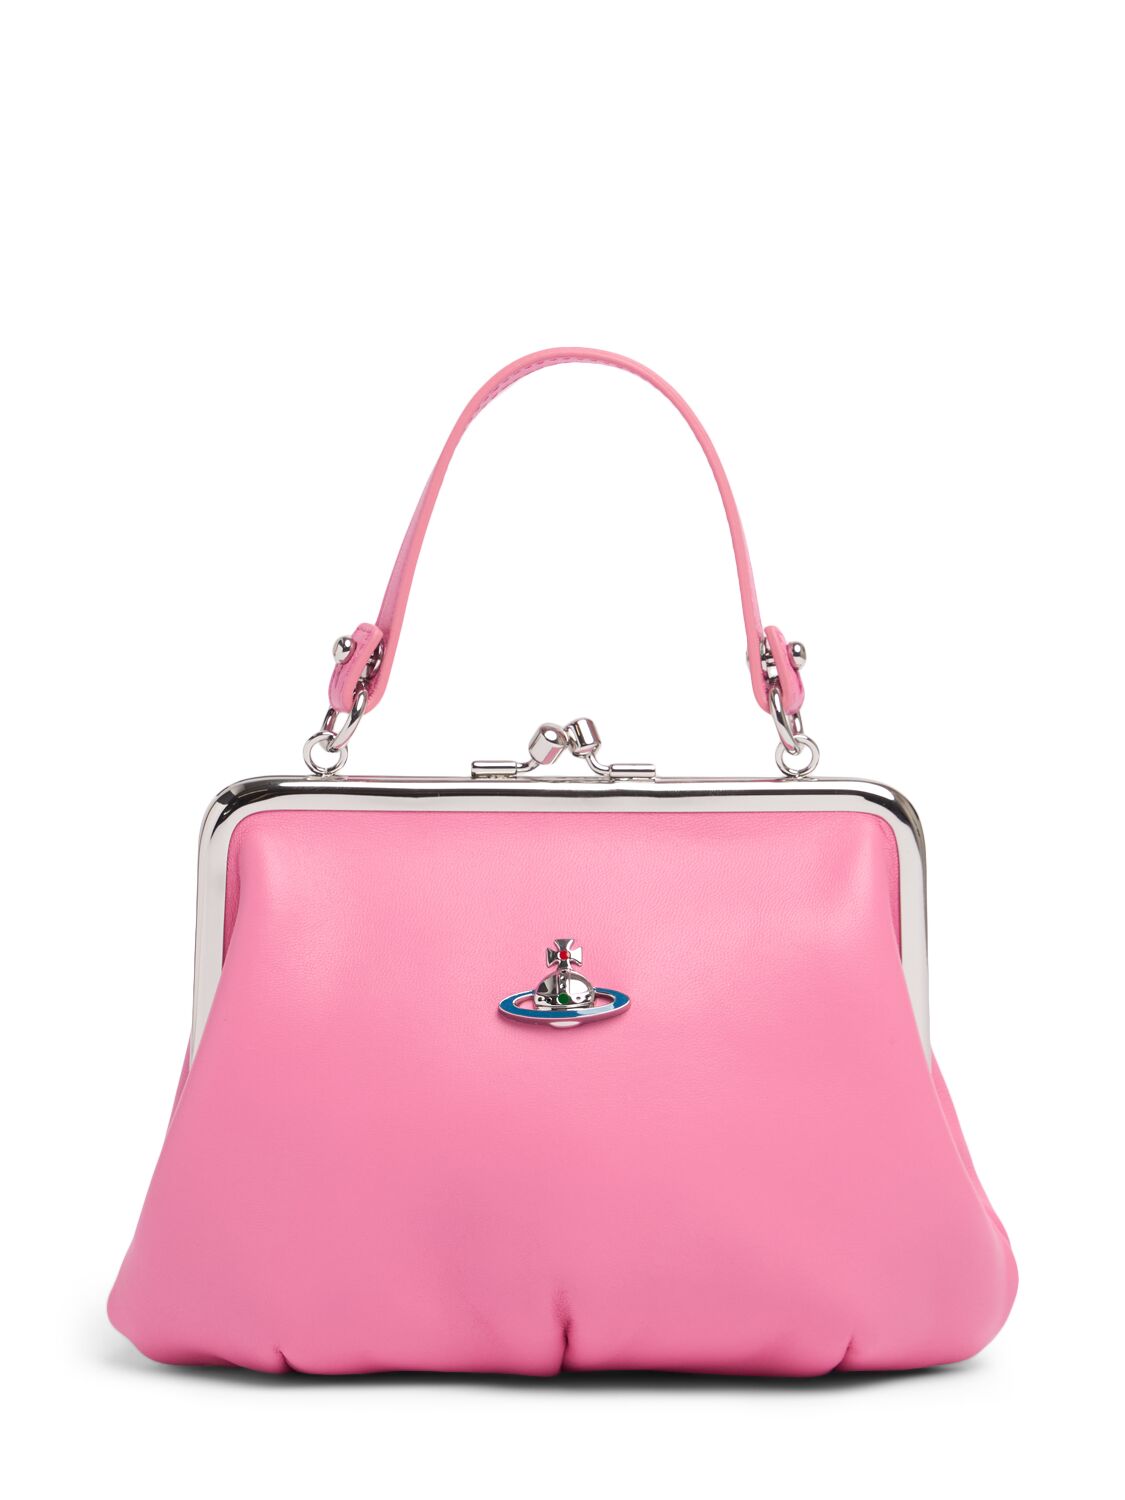 Vivienne Westwood Granny Frame Leather Top Handle Bag In Pink